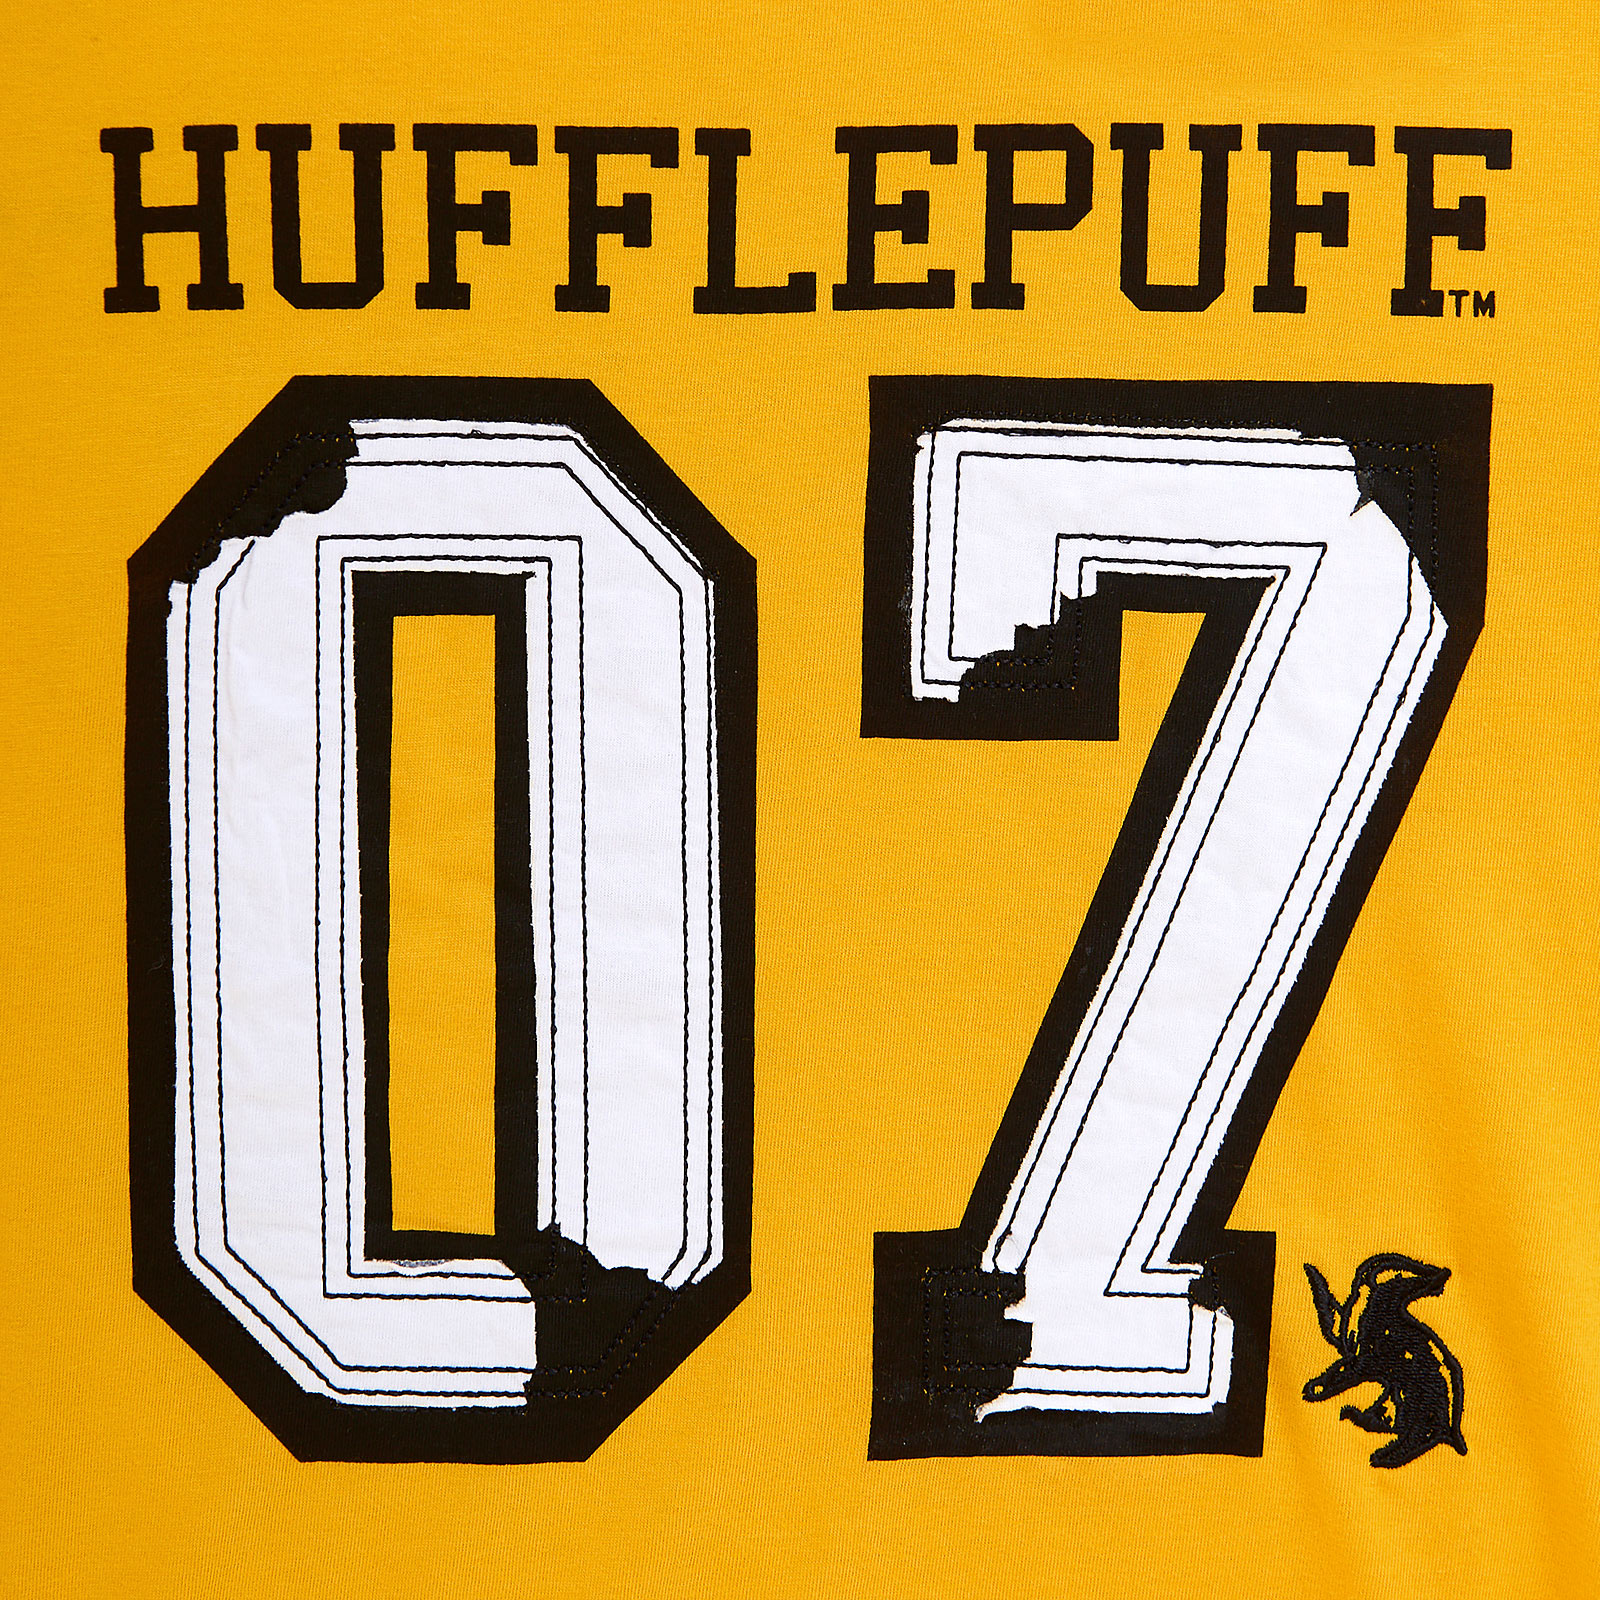 Hufflepuff Seeker Cedric Diggory T-Shirt Yellow - Harry Potter